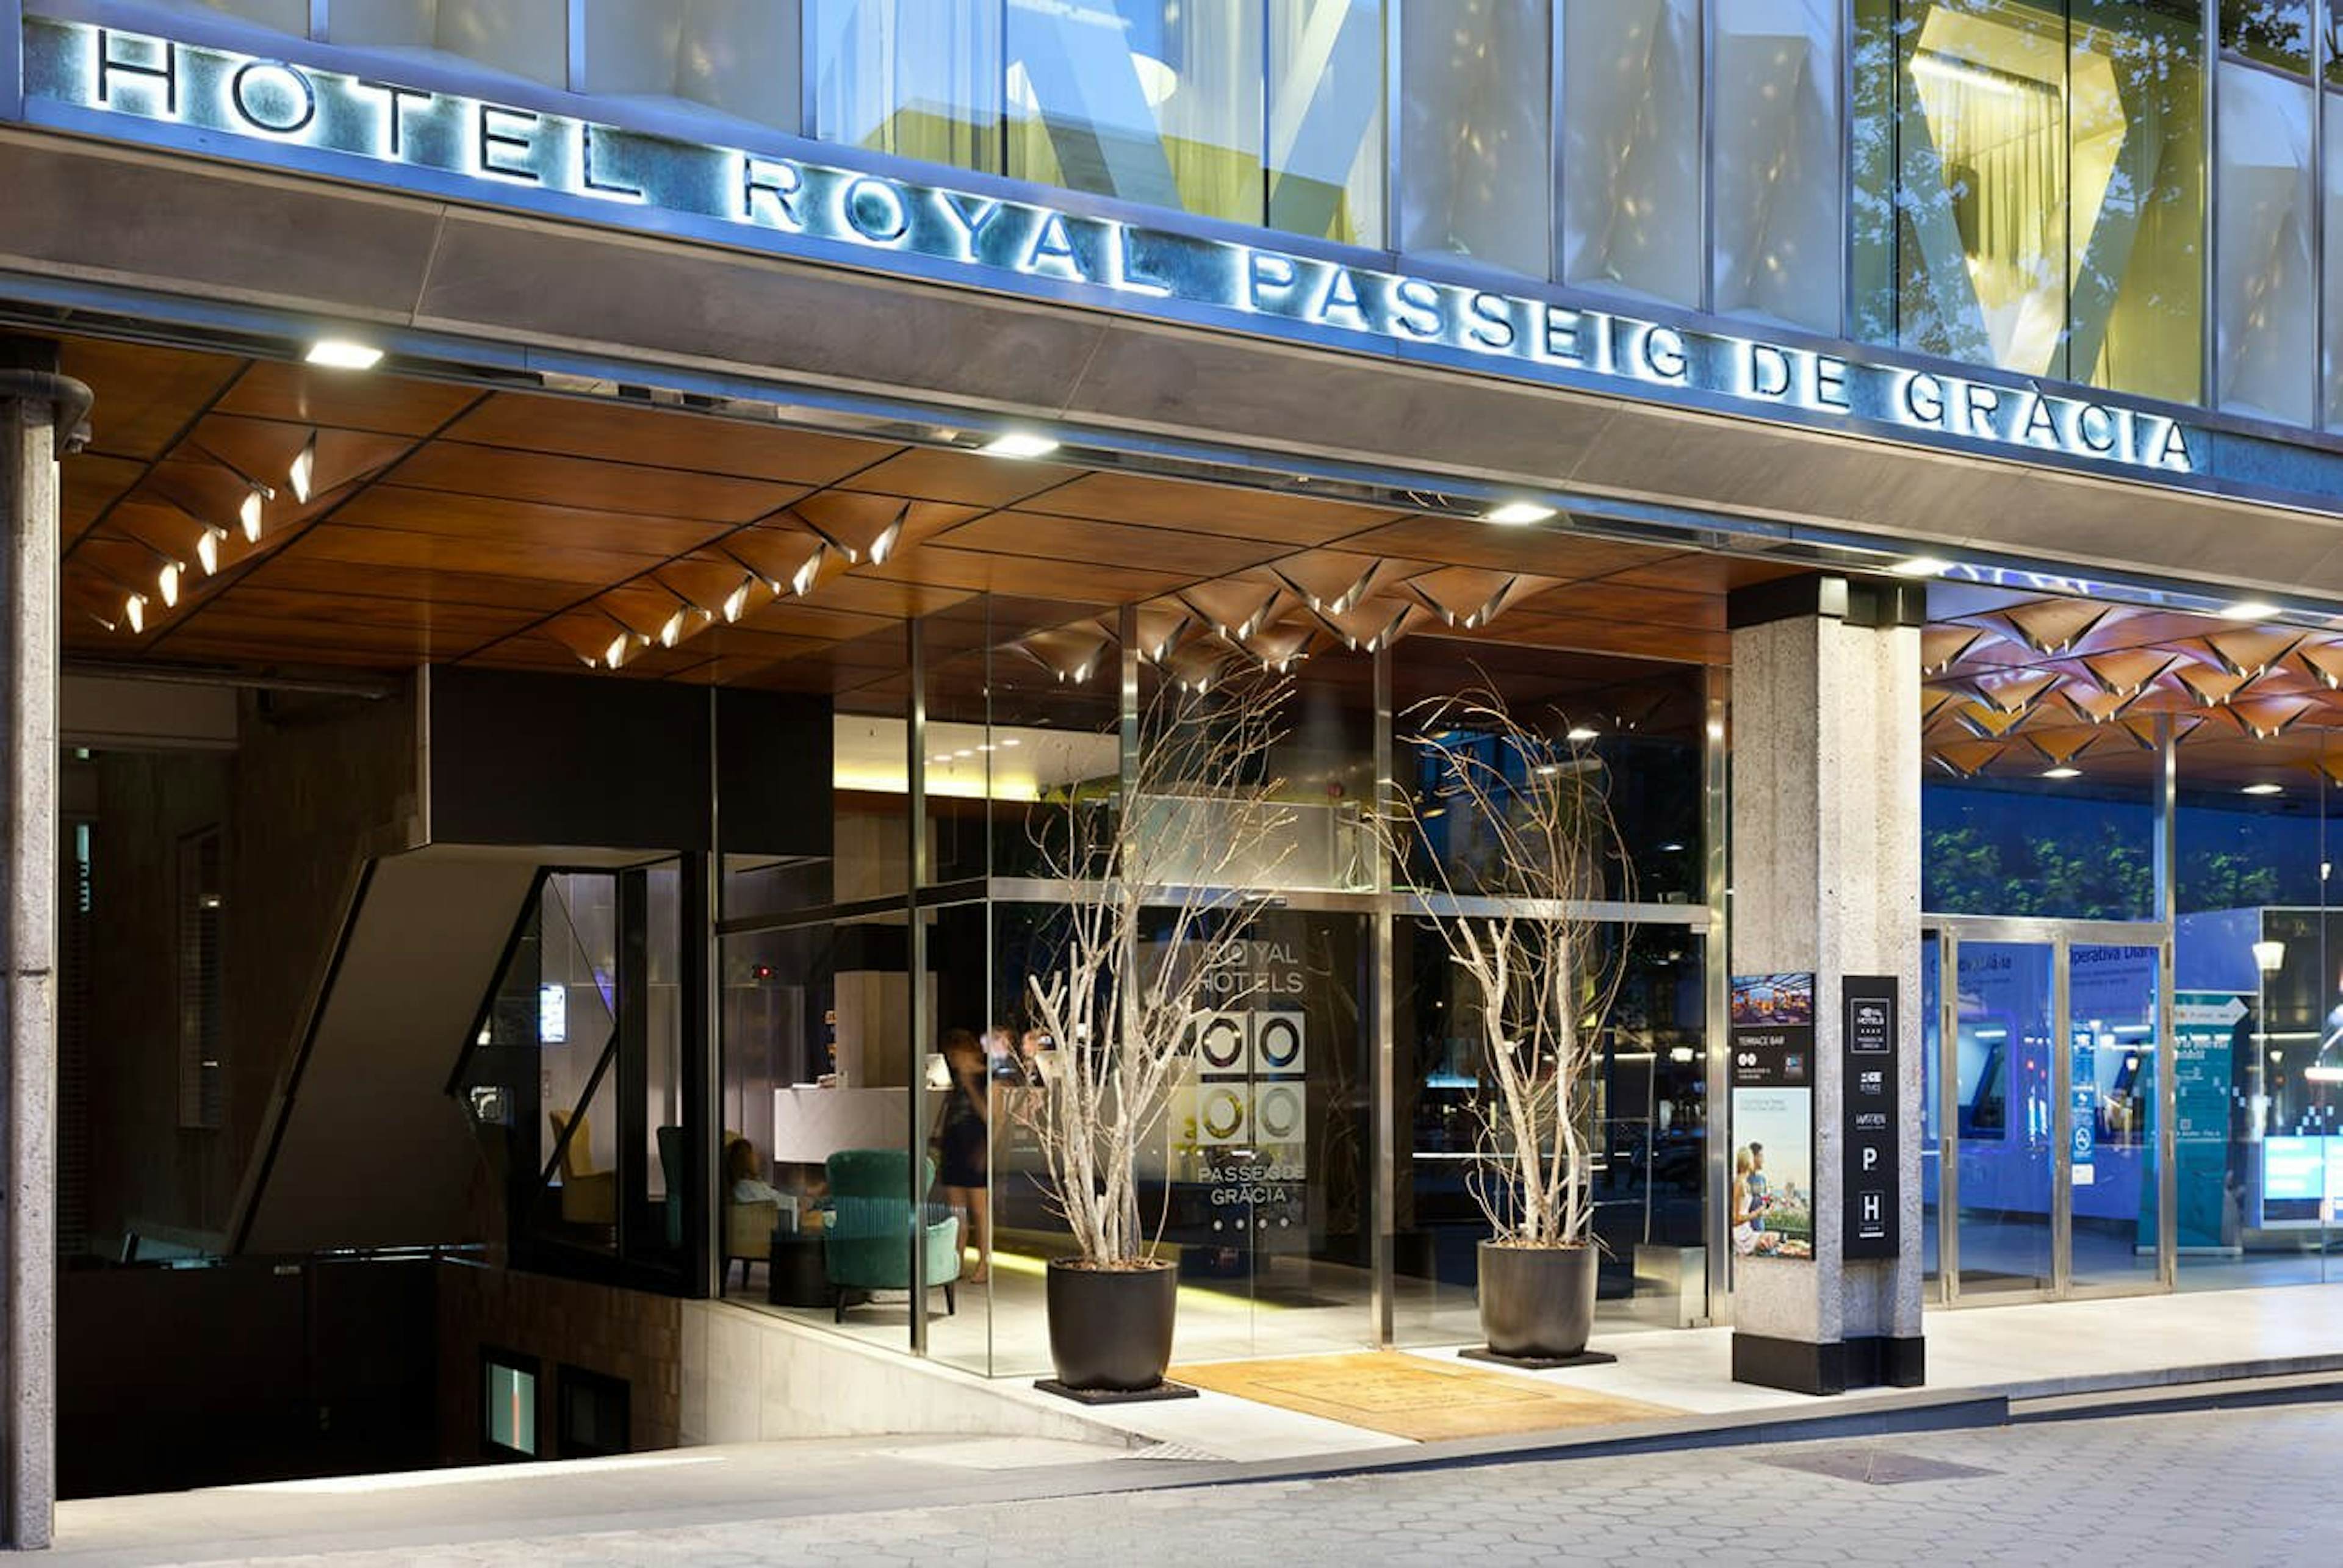 Royal Passeig de Gracia Hotel - Meeting Rooms-Terrace 83.3 image 3